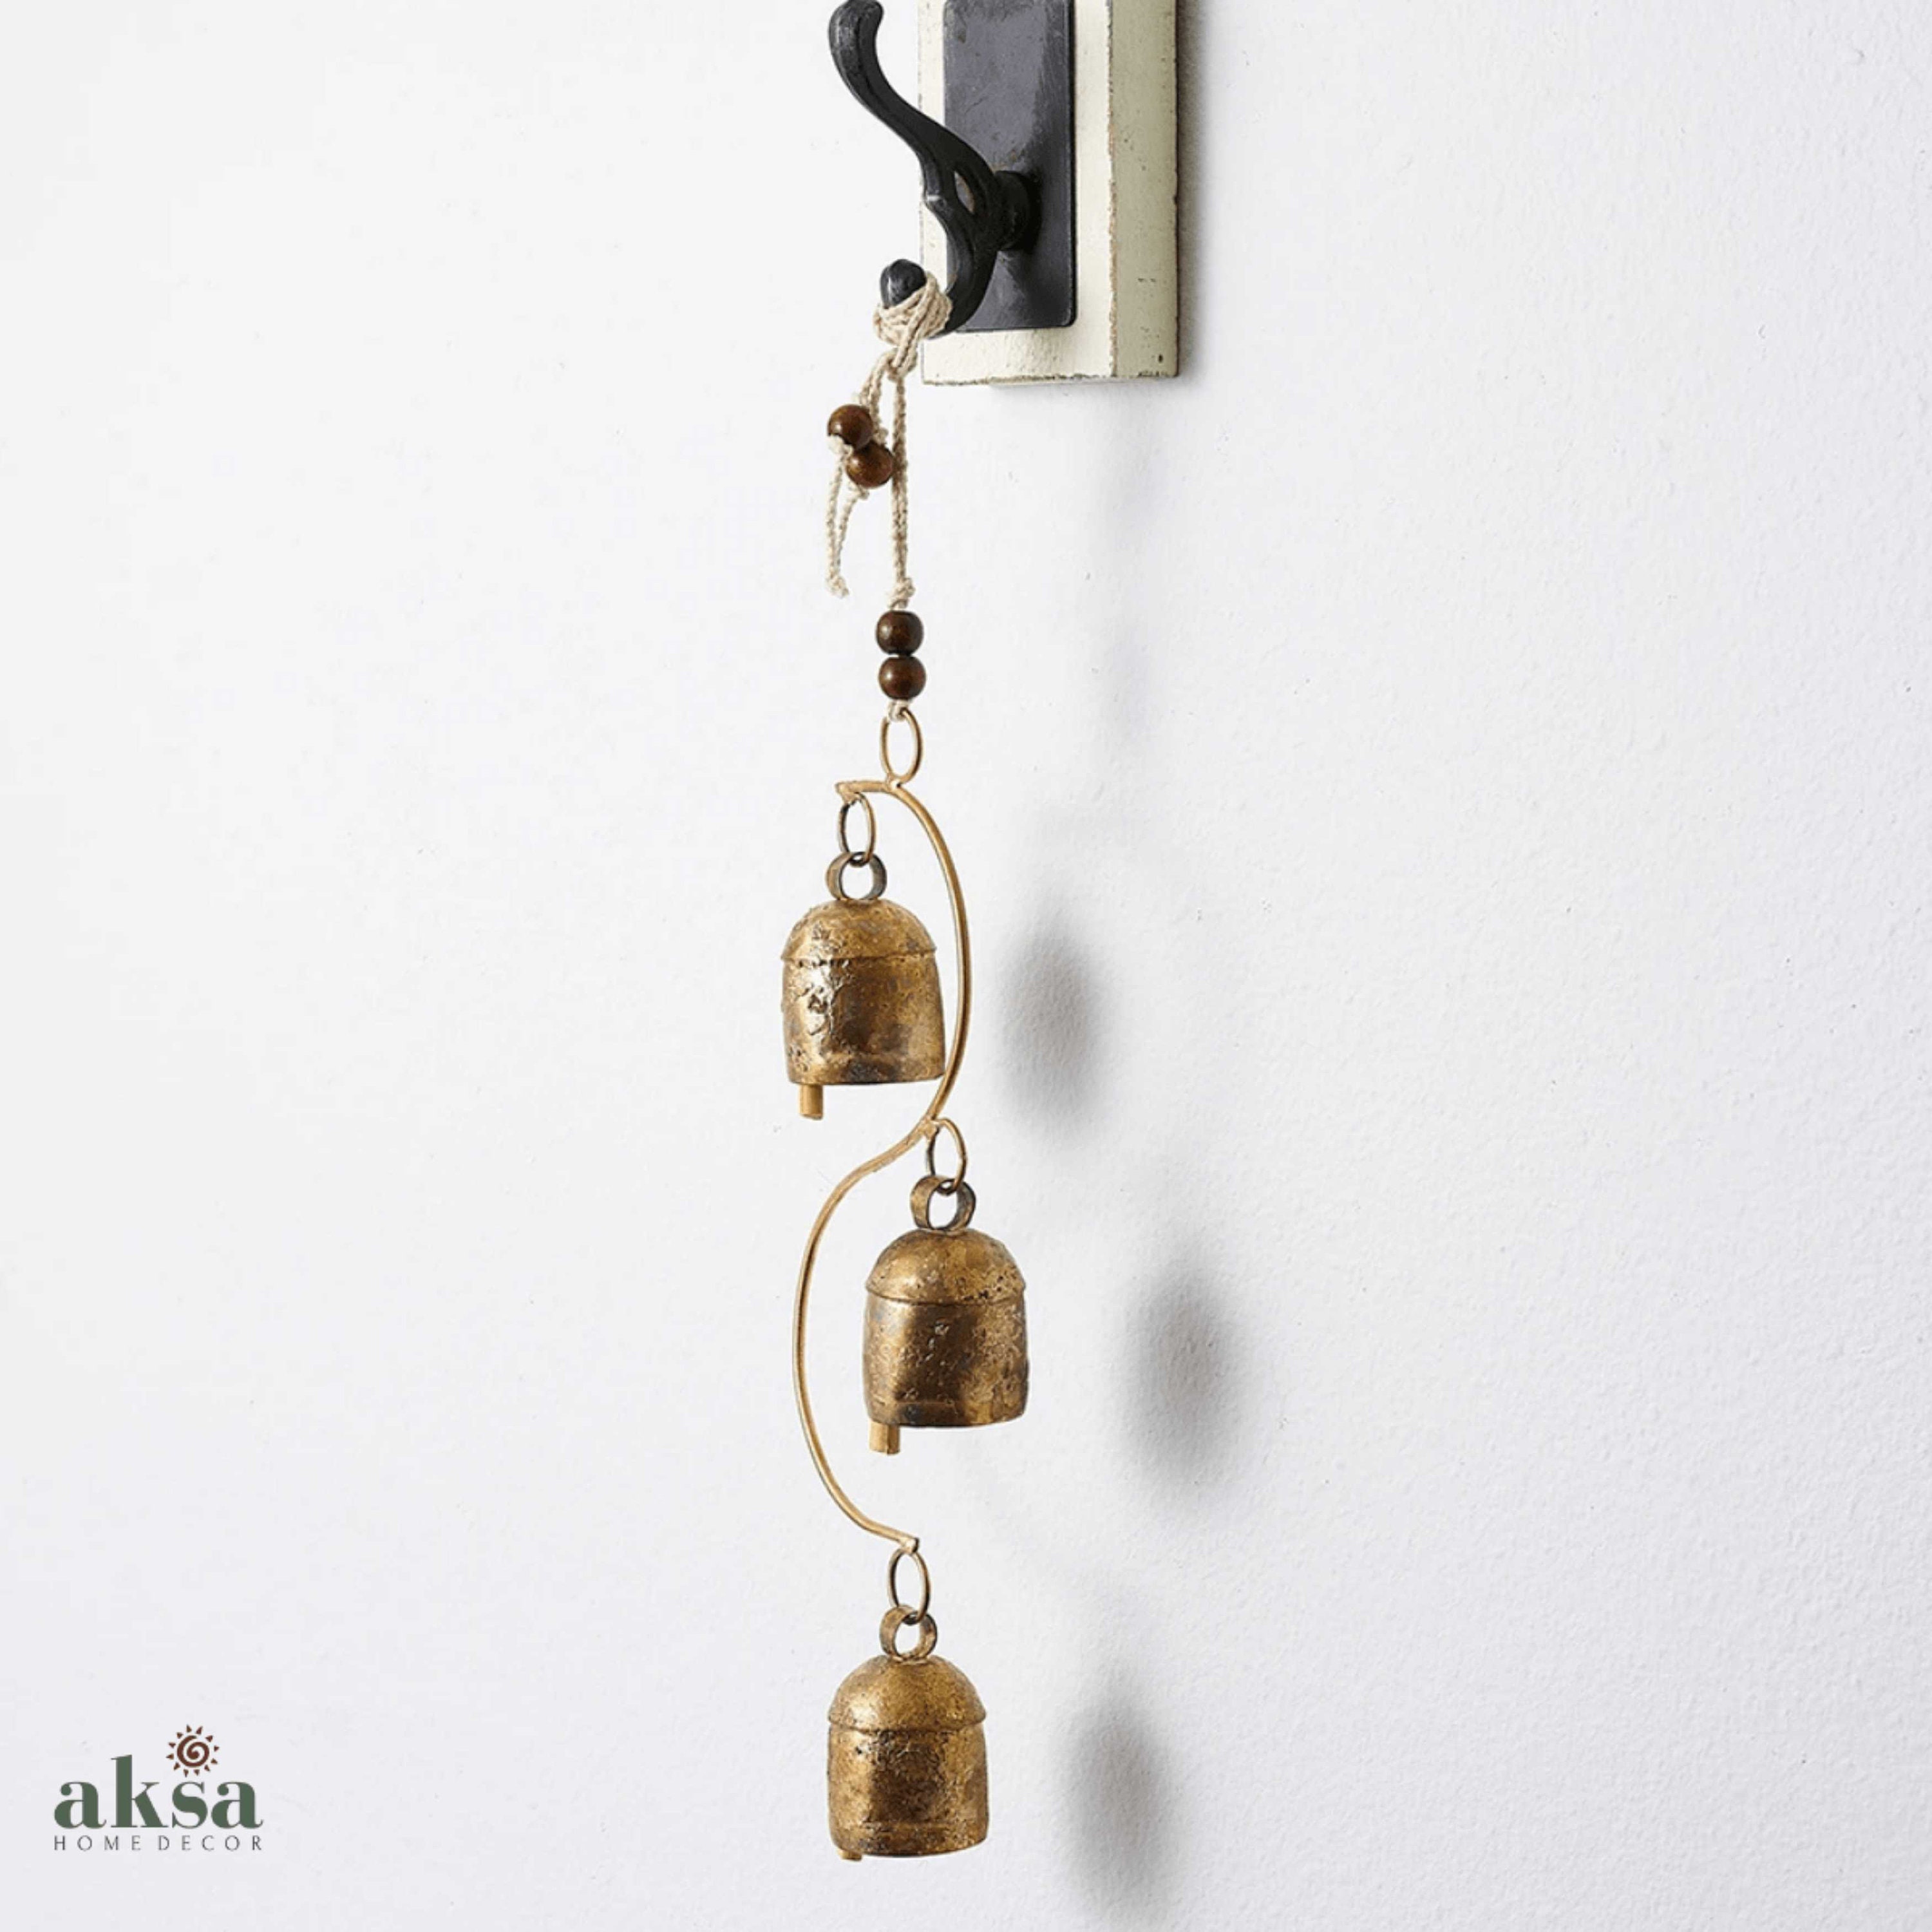 Set of 3 Rustic Decorative Hanging Bells, Adjustable String, Wood Clapper